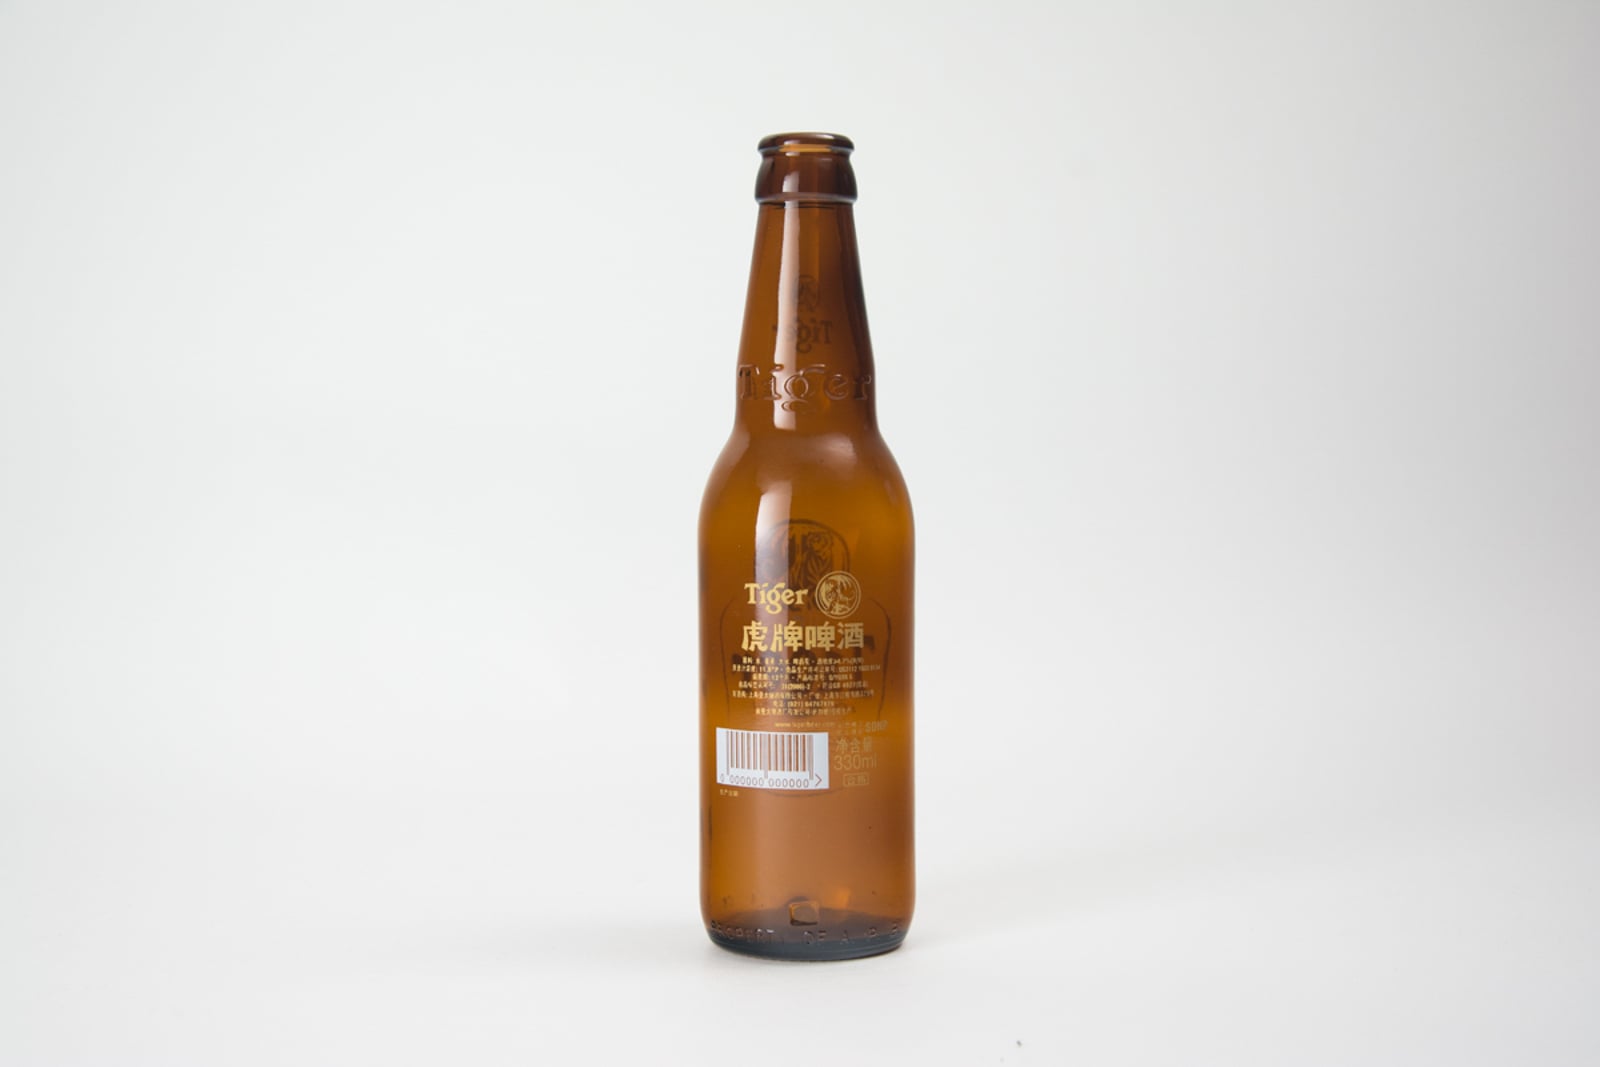 Tiger "World Acclaimed Lager Beer" Bottle (Shanghai), 330 ml